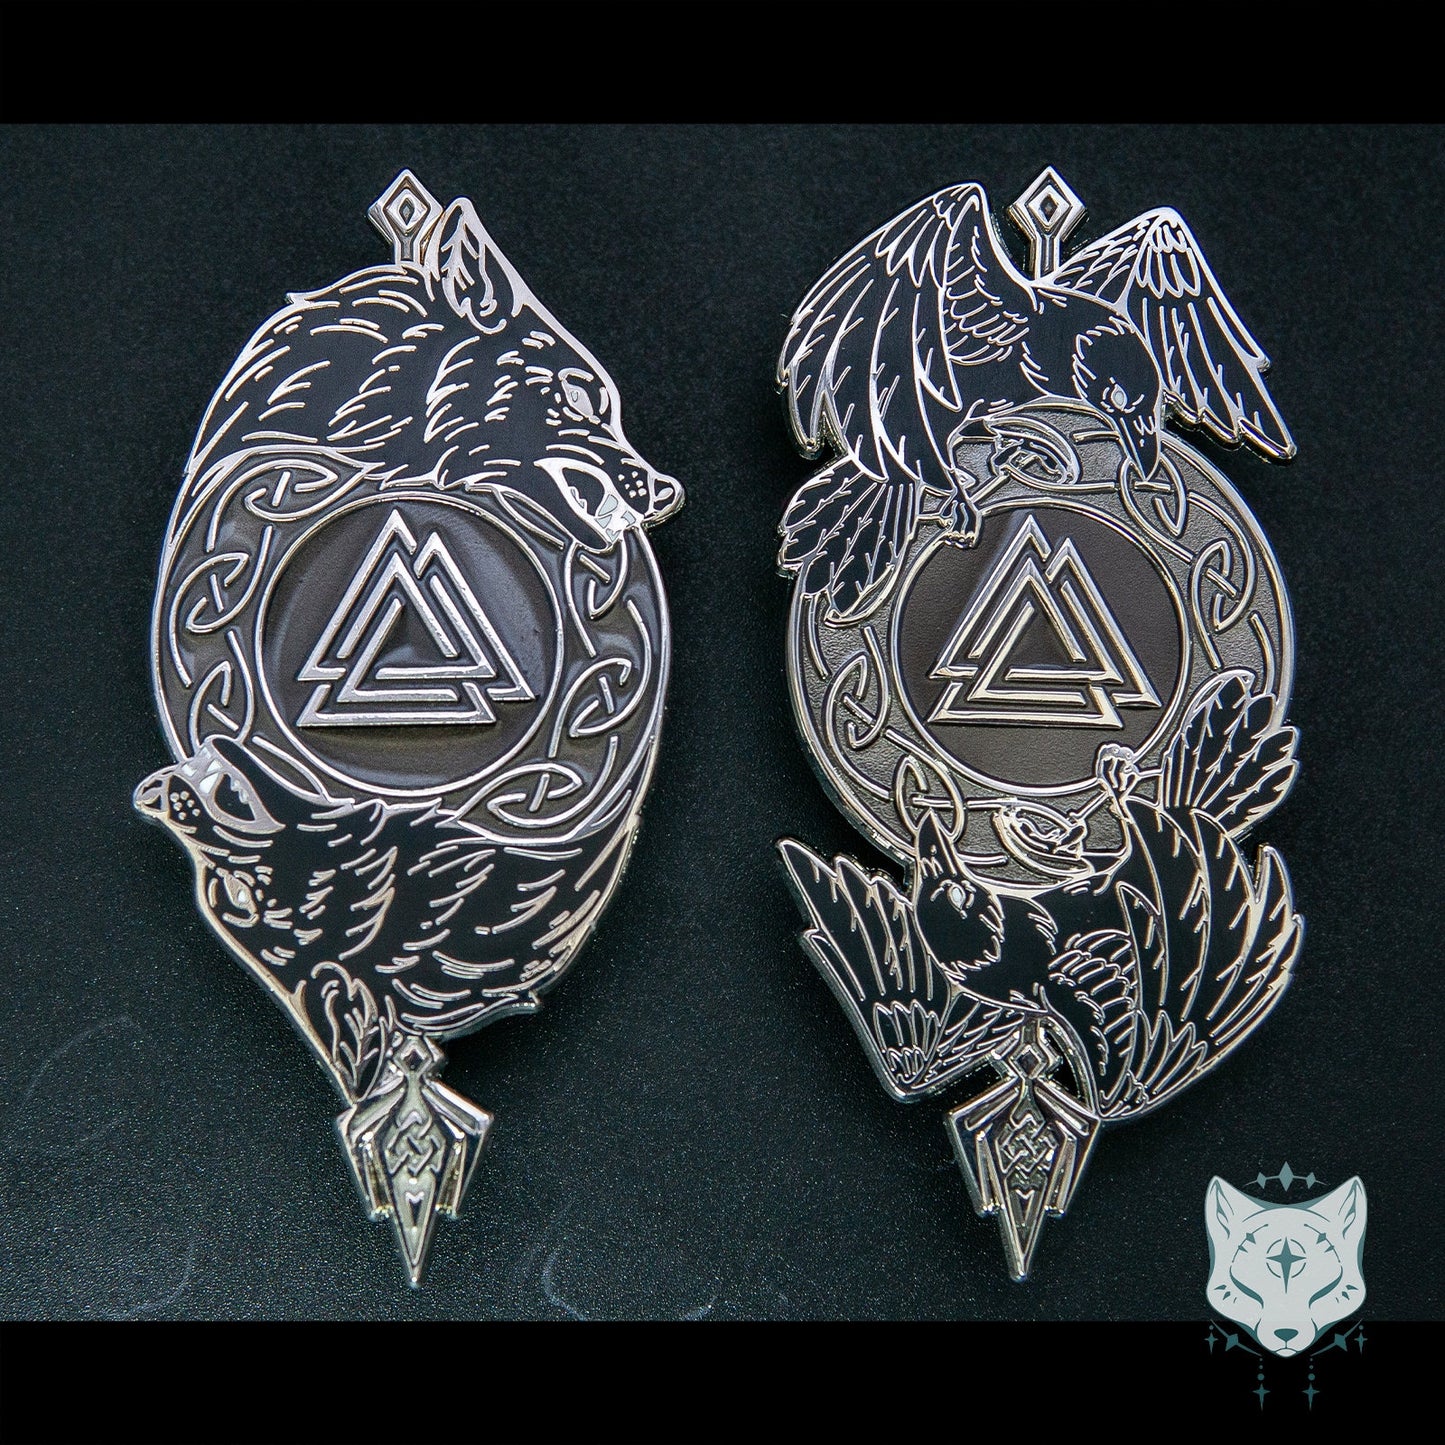 Odin's Wolves Enamel Pin - RETIRING Silver Variant - only 100 made - 3.3" / 84mm Enamel Pin, Geri and Freki, Norse Mythology